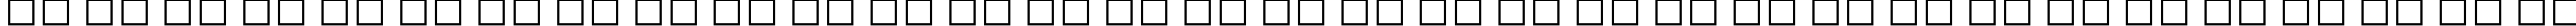 Пример написания русского алфавита шрифтом Bodoni MT Bold